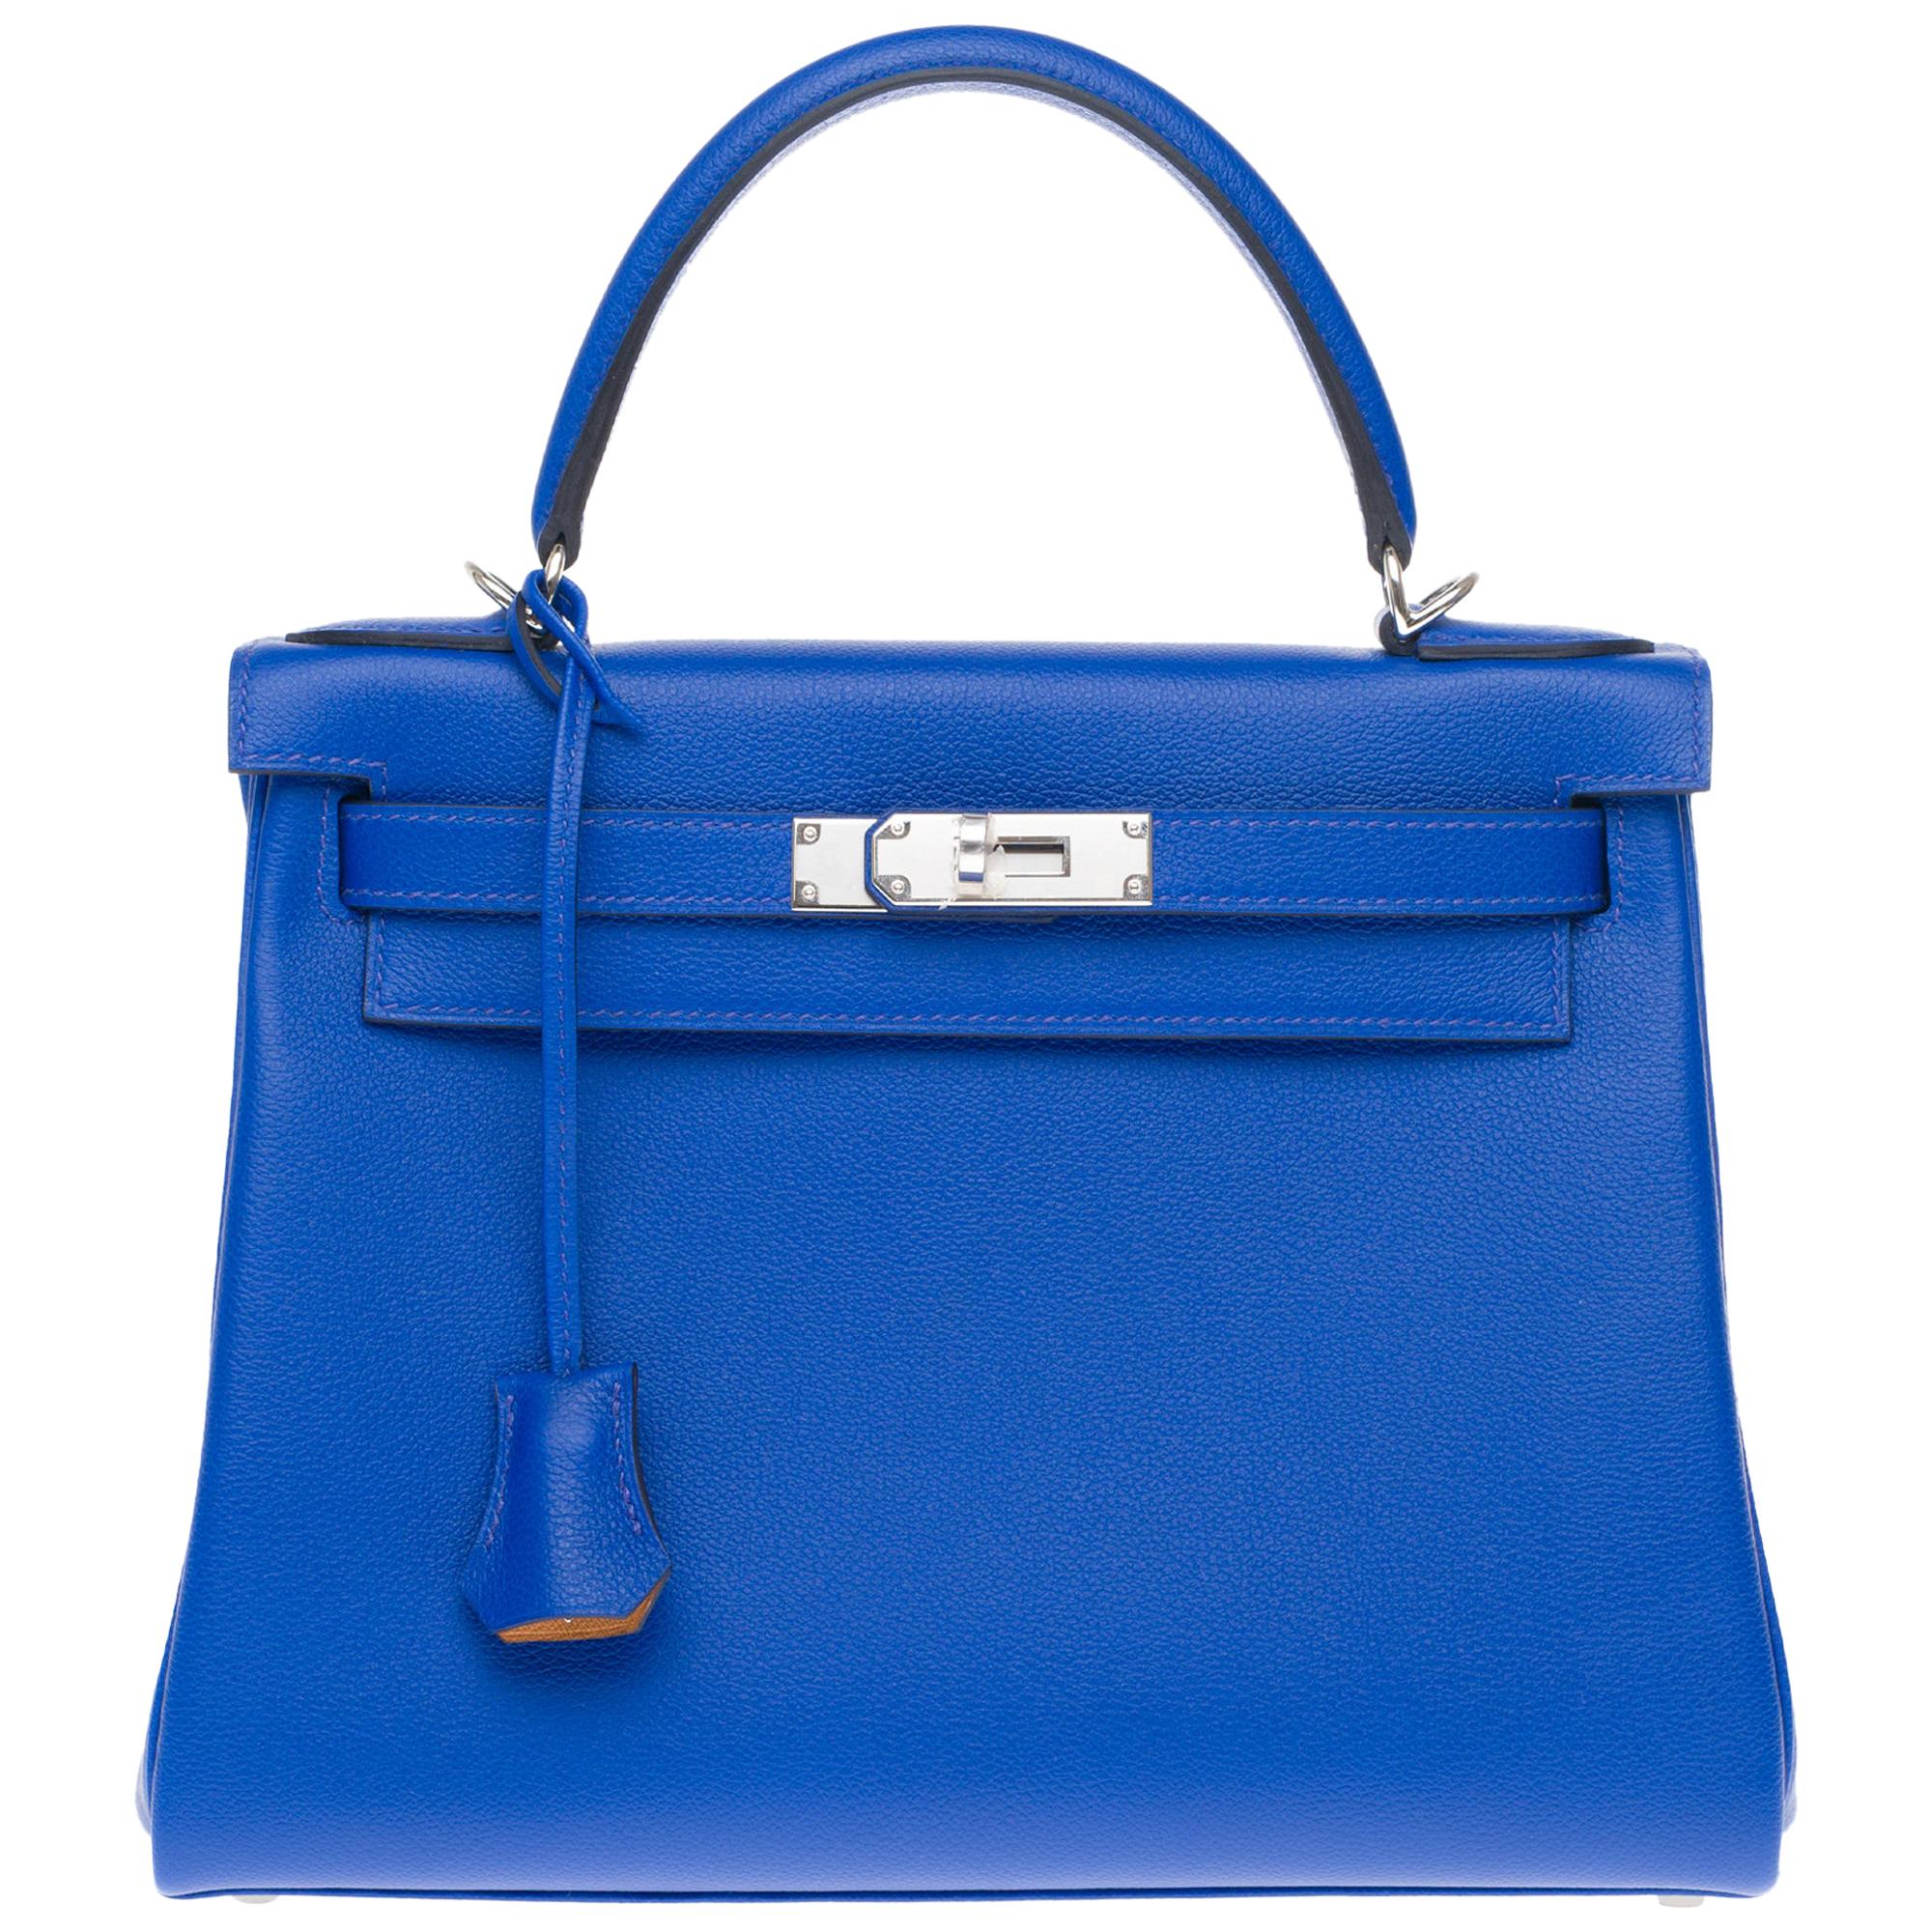 BRAND NEW-Hermès Kelly 28 Evercolor strap shoulder bag in blue royal calf, PHW